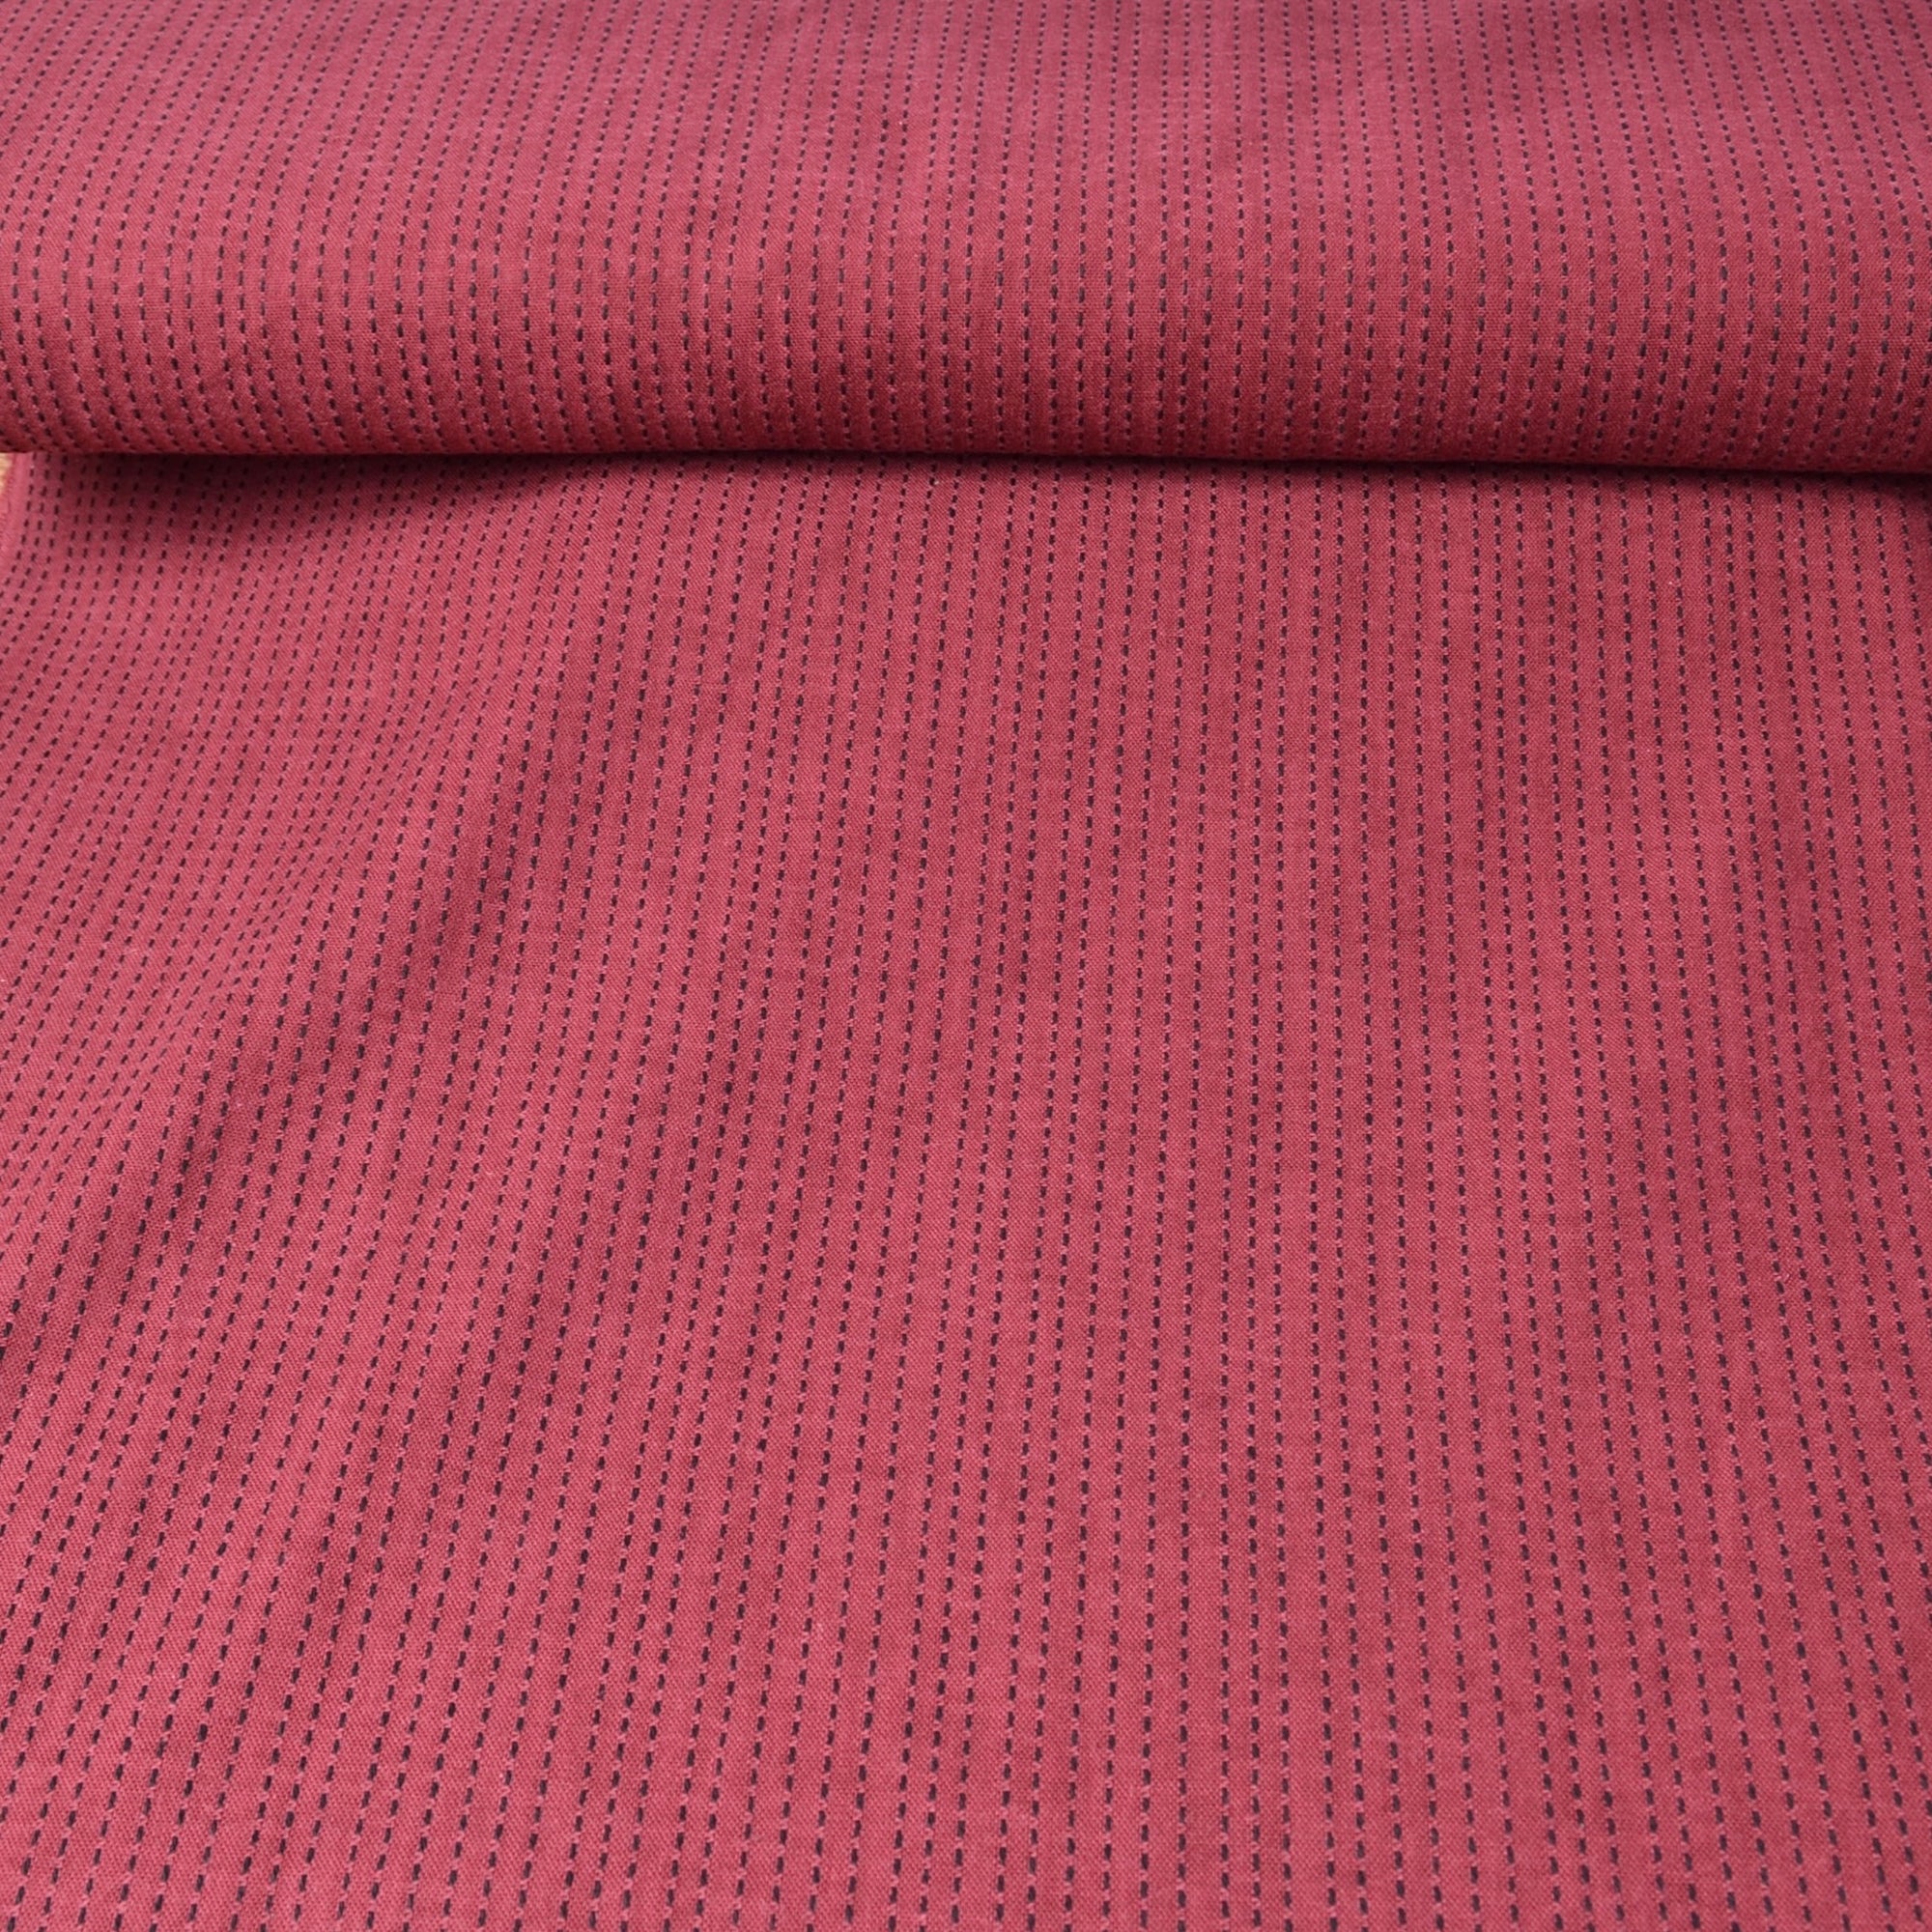 Cotton Sewing Fabric, Madder Red Sashiko Stitched Style